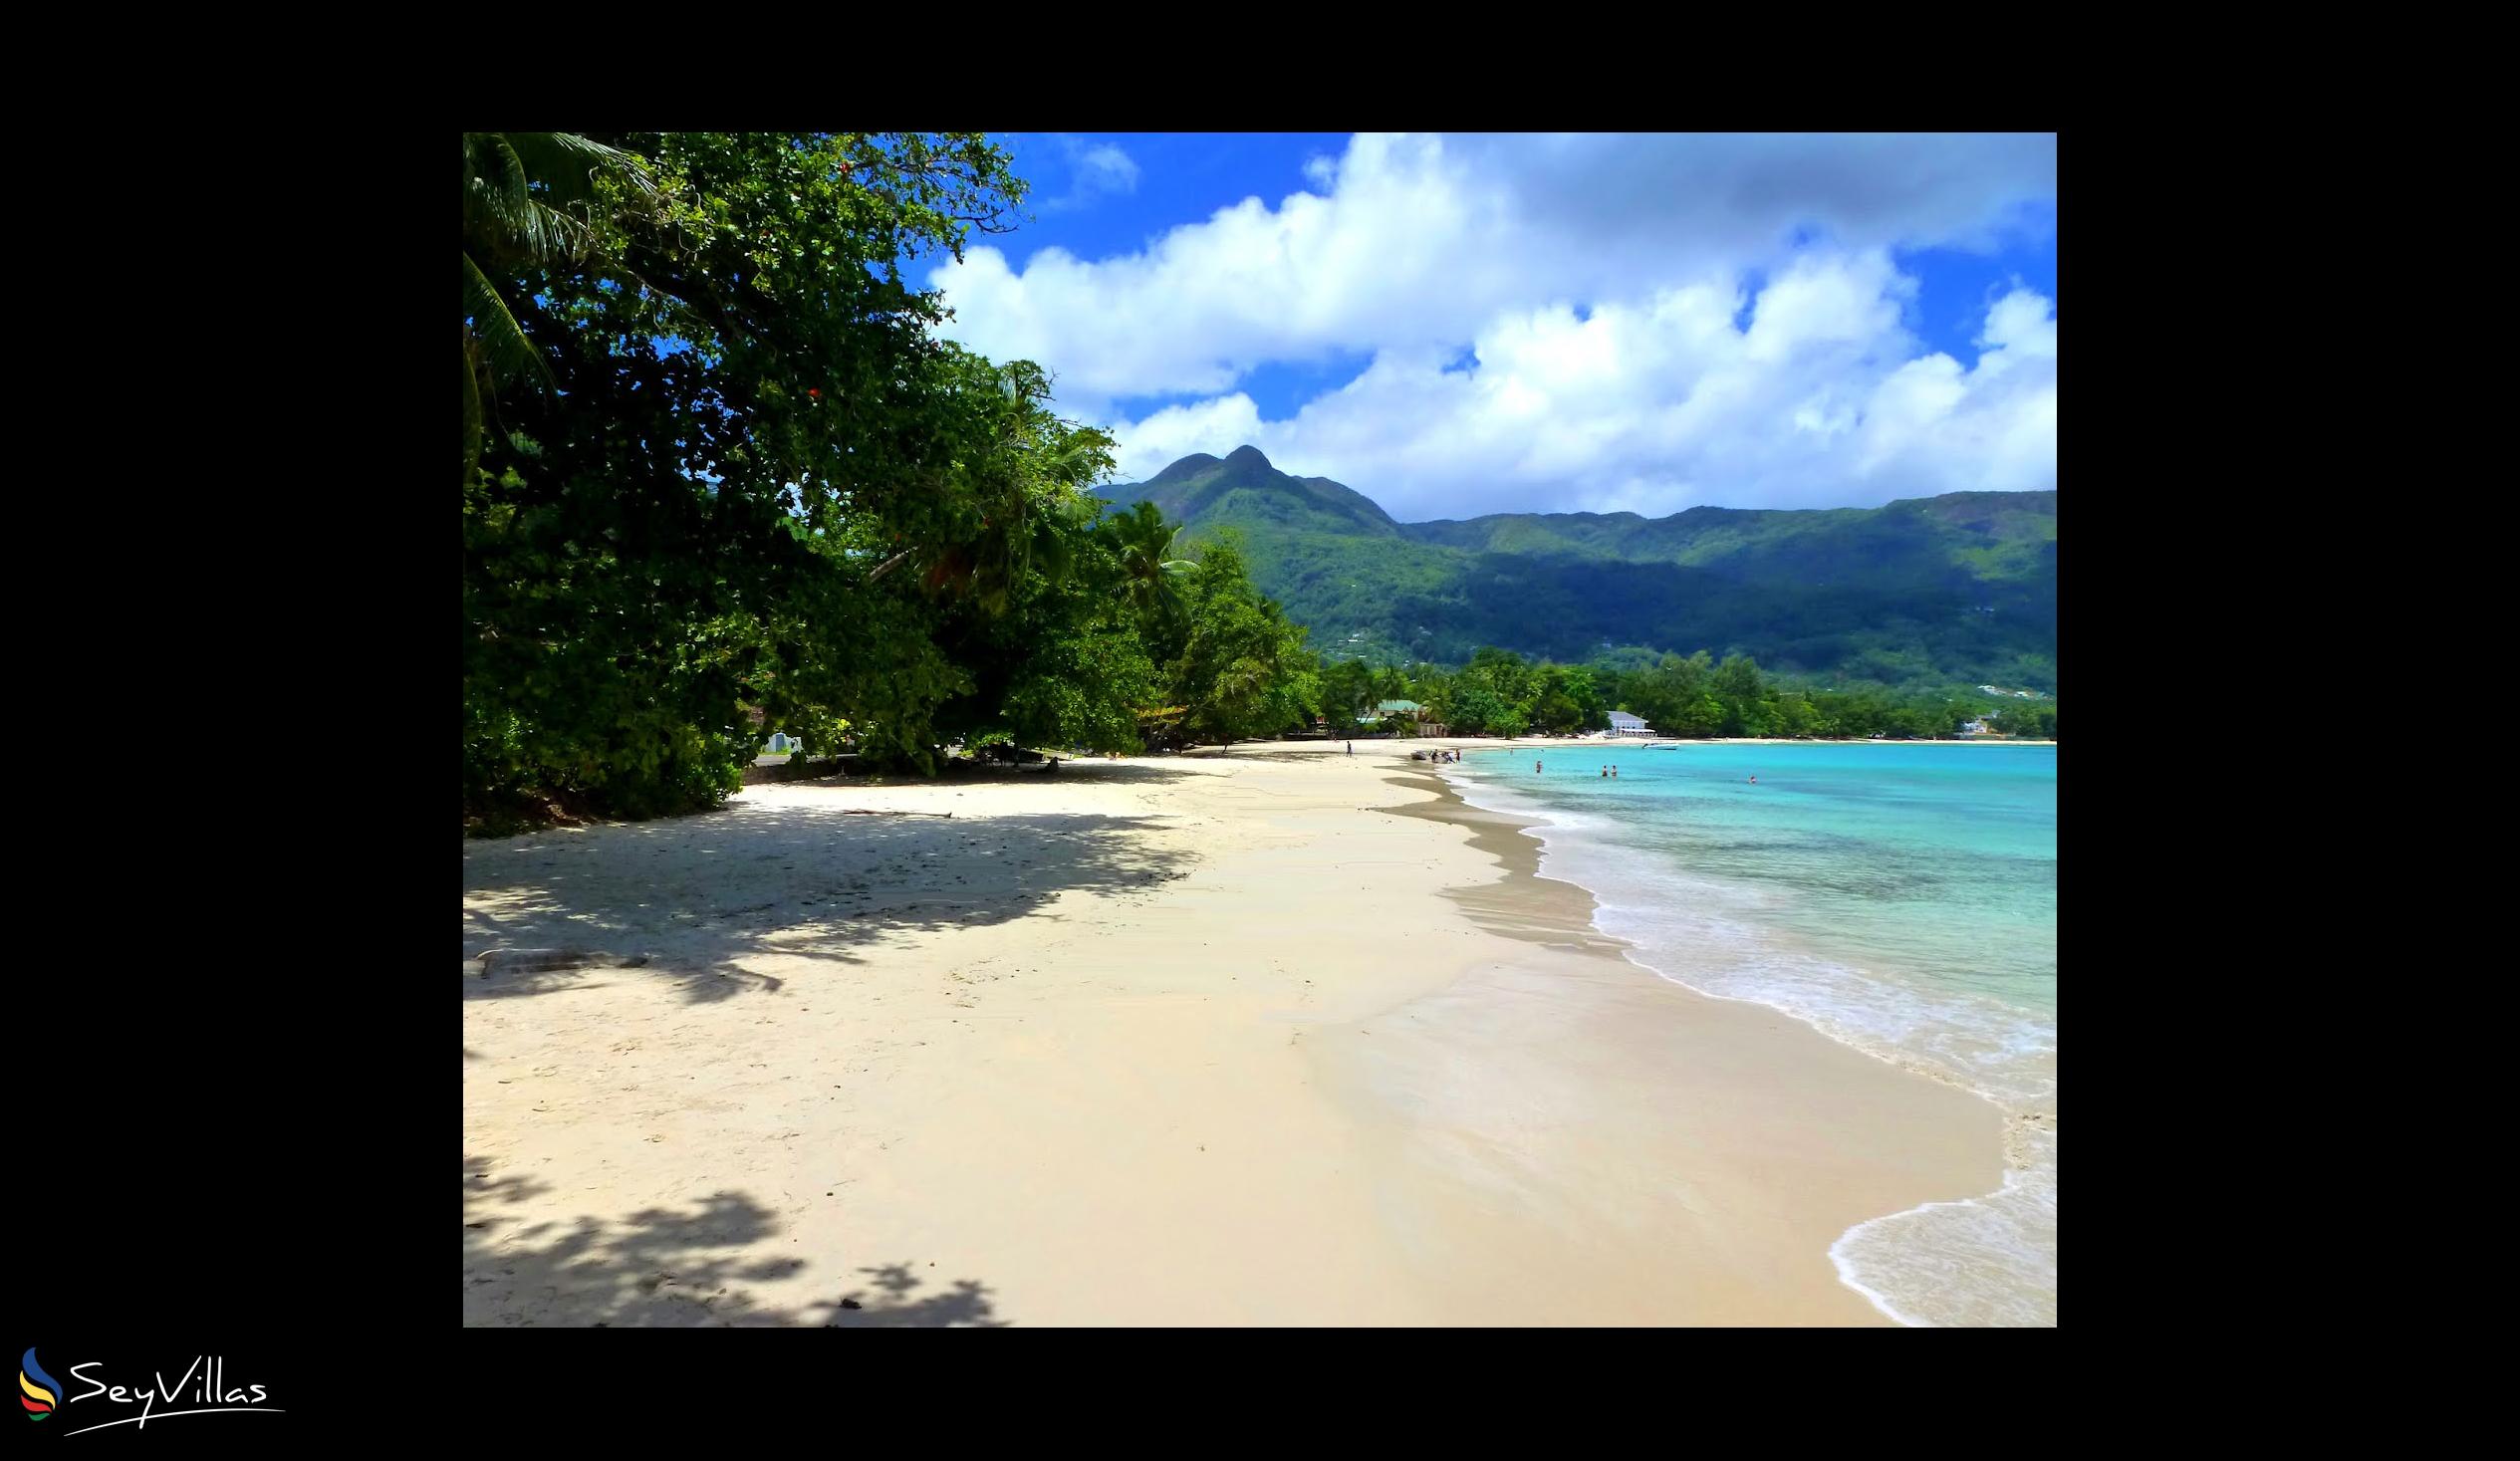 Photo 66: Bel Horizon - Beaches - Mahé (Seychelles)